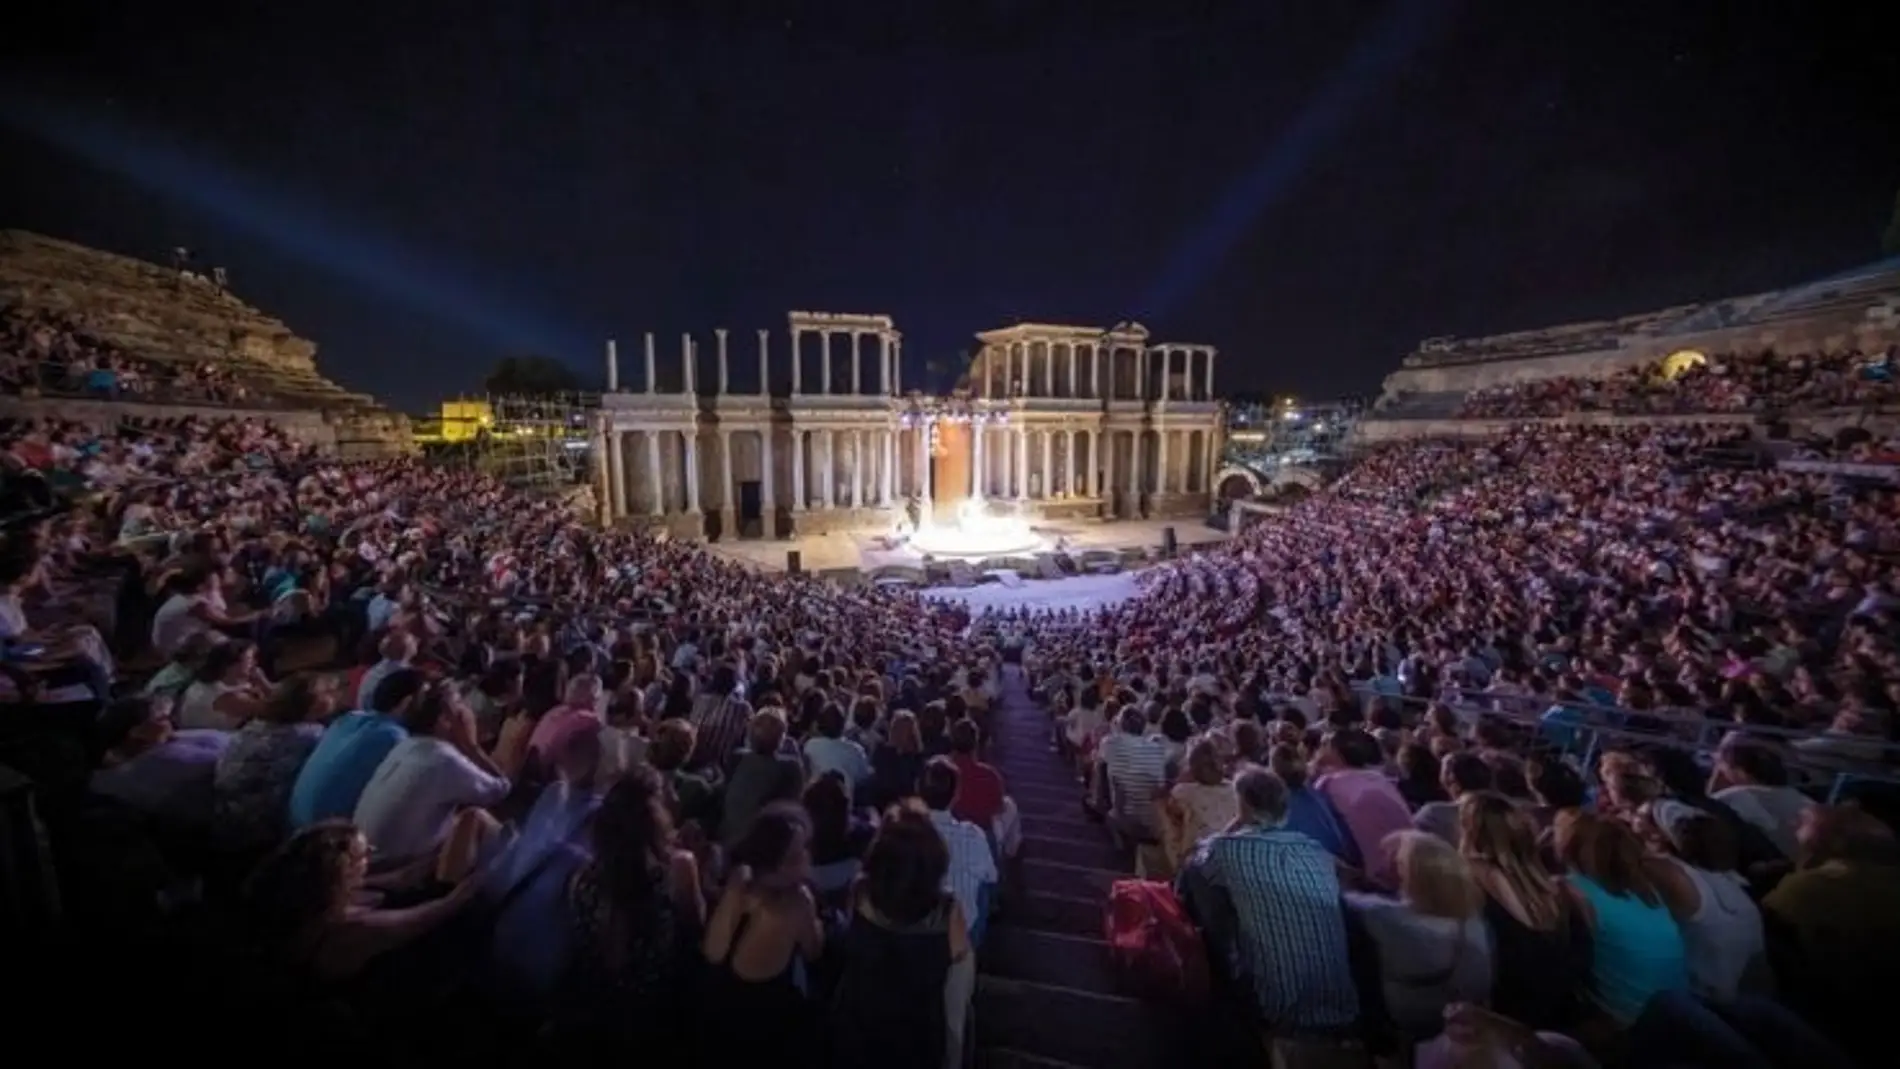 Festival Internacional de Teatro Clásico de Mérida.